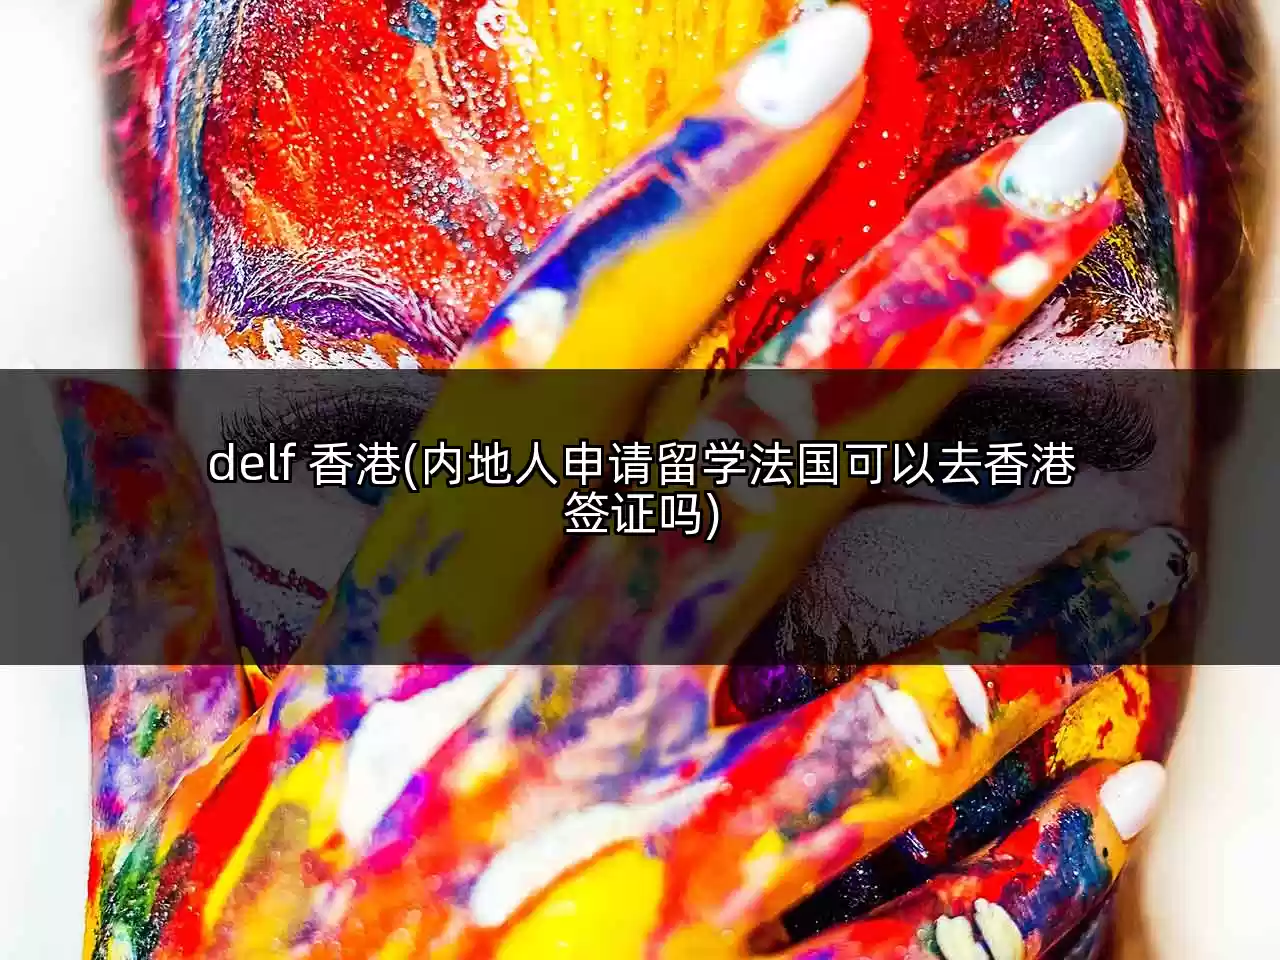 delf 香港(内地人申请留学法国可以去香港签证吗)